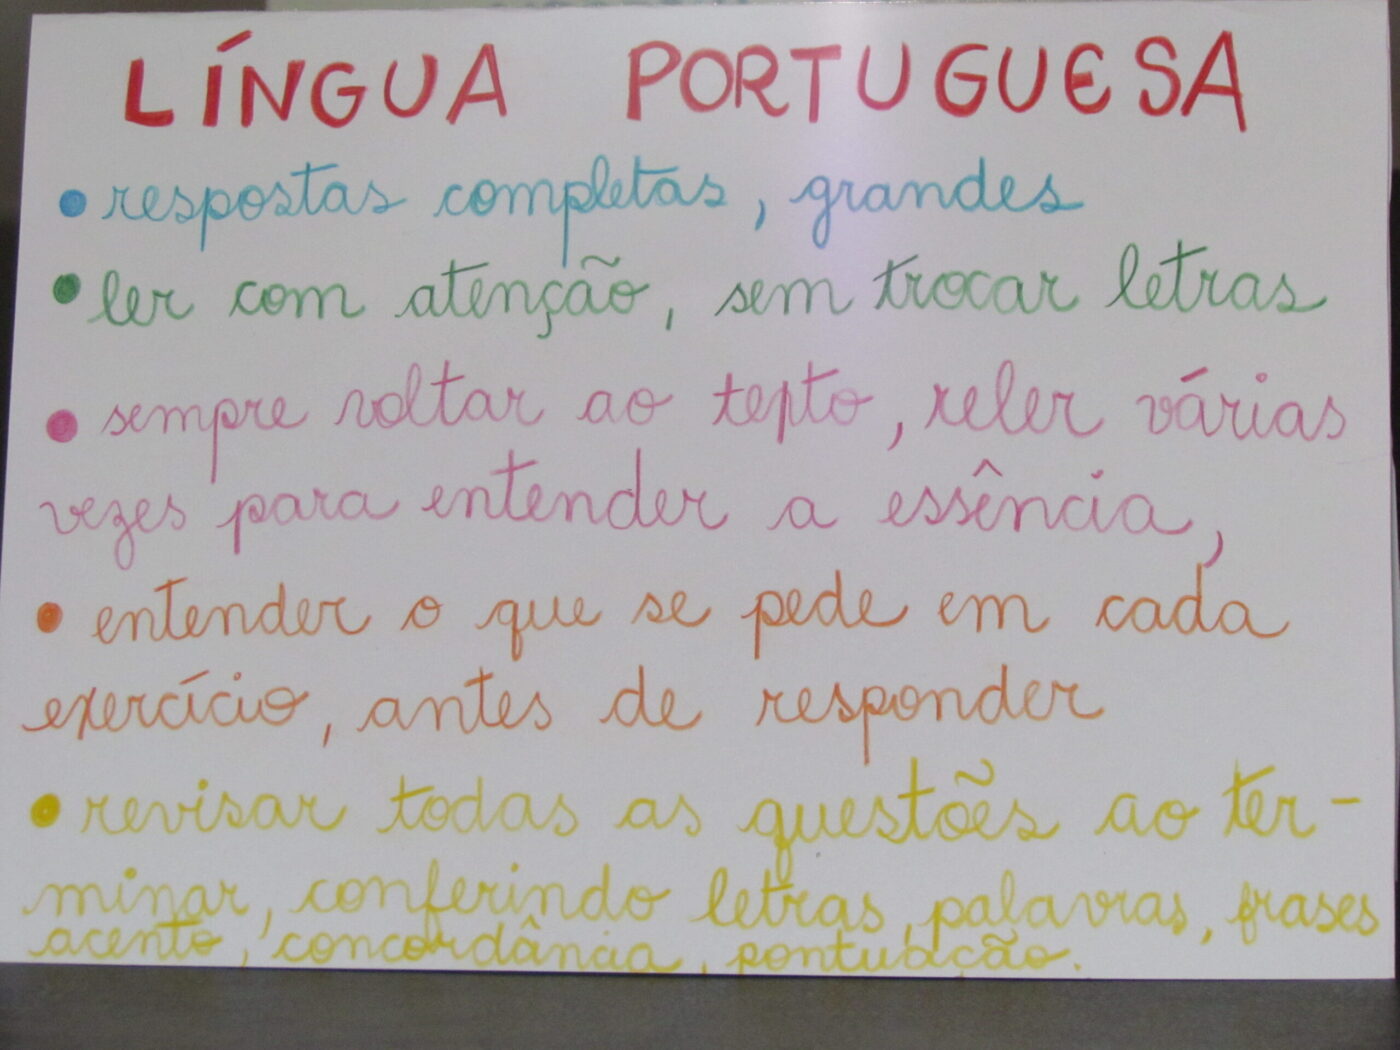 Lingua_Portuguesa_bem_familia_aula_particular_bh